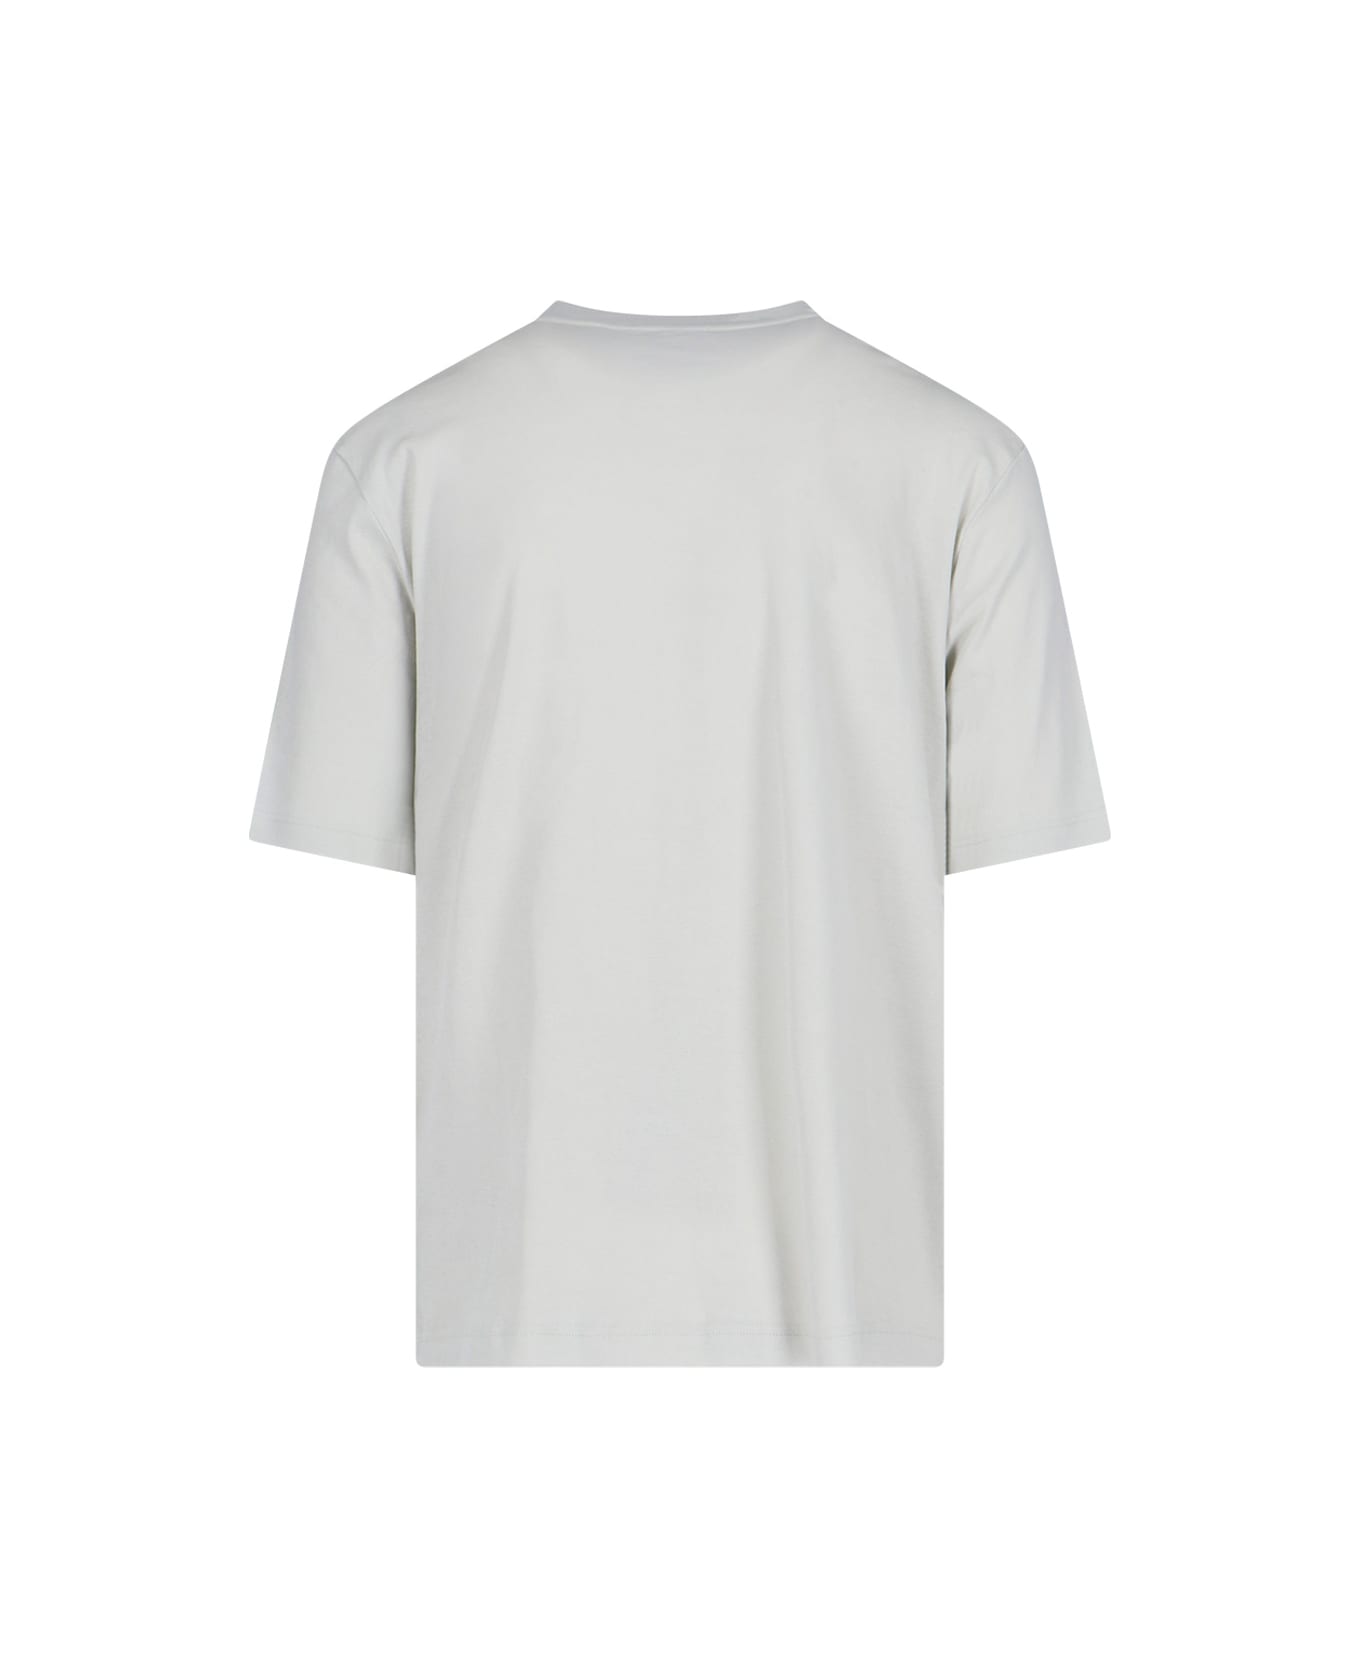 Jil Sander '3-pack' T-shirt Set - White タンクトップ